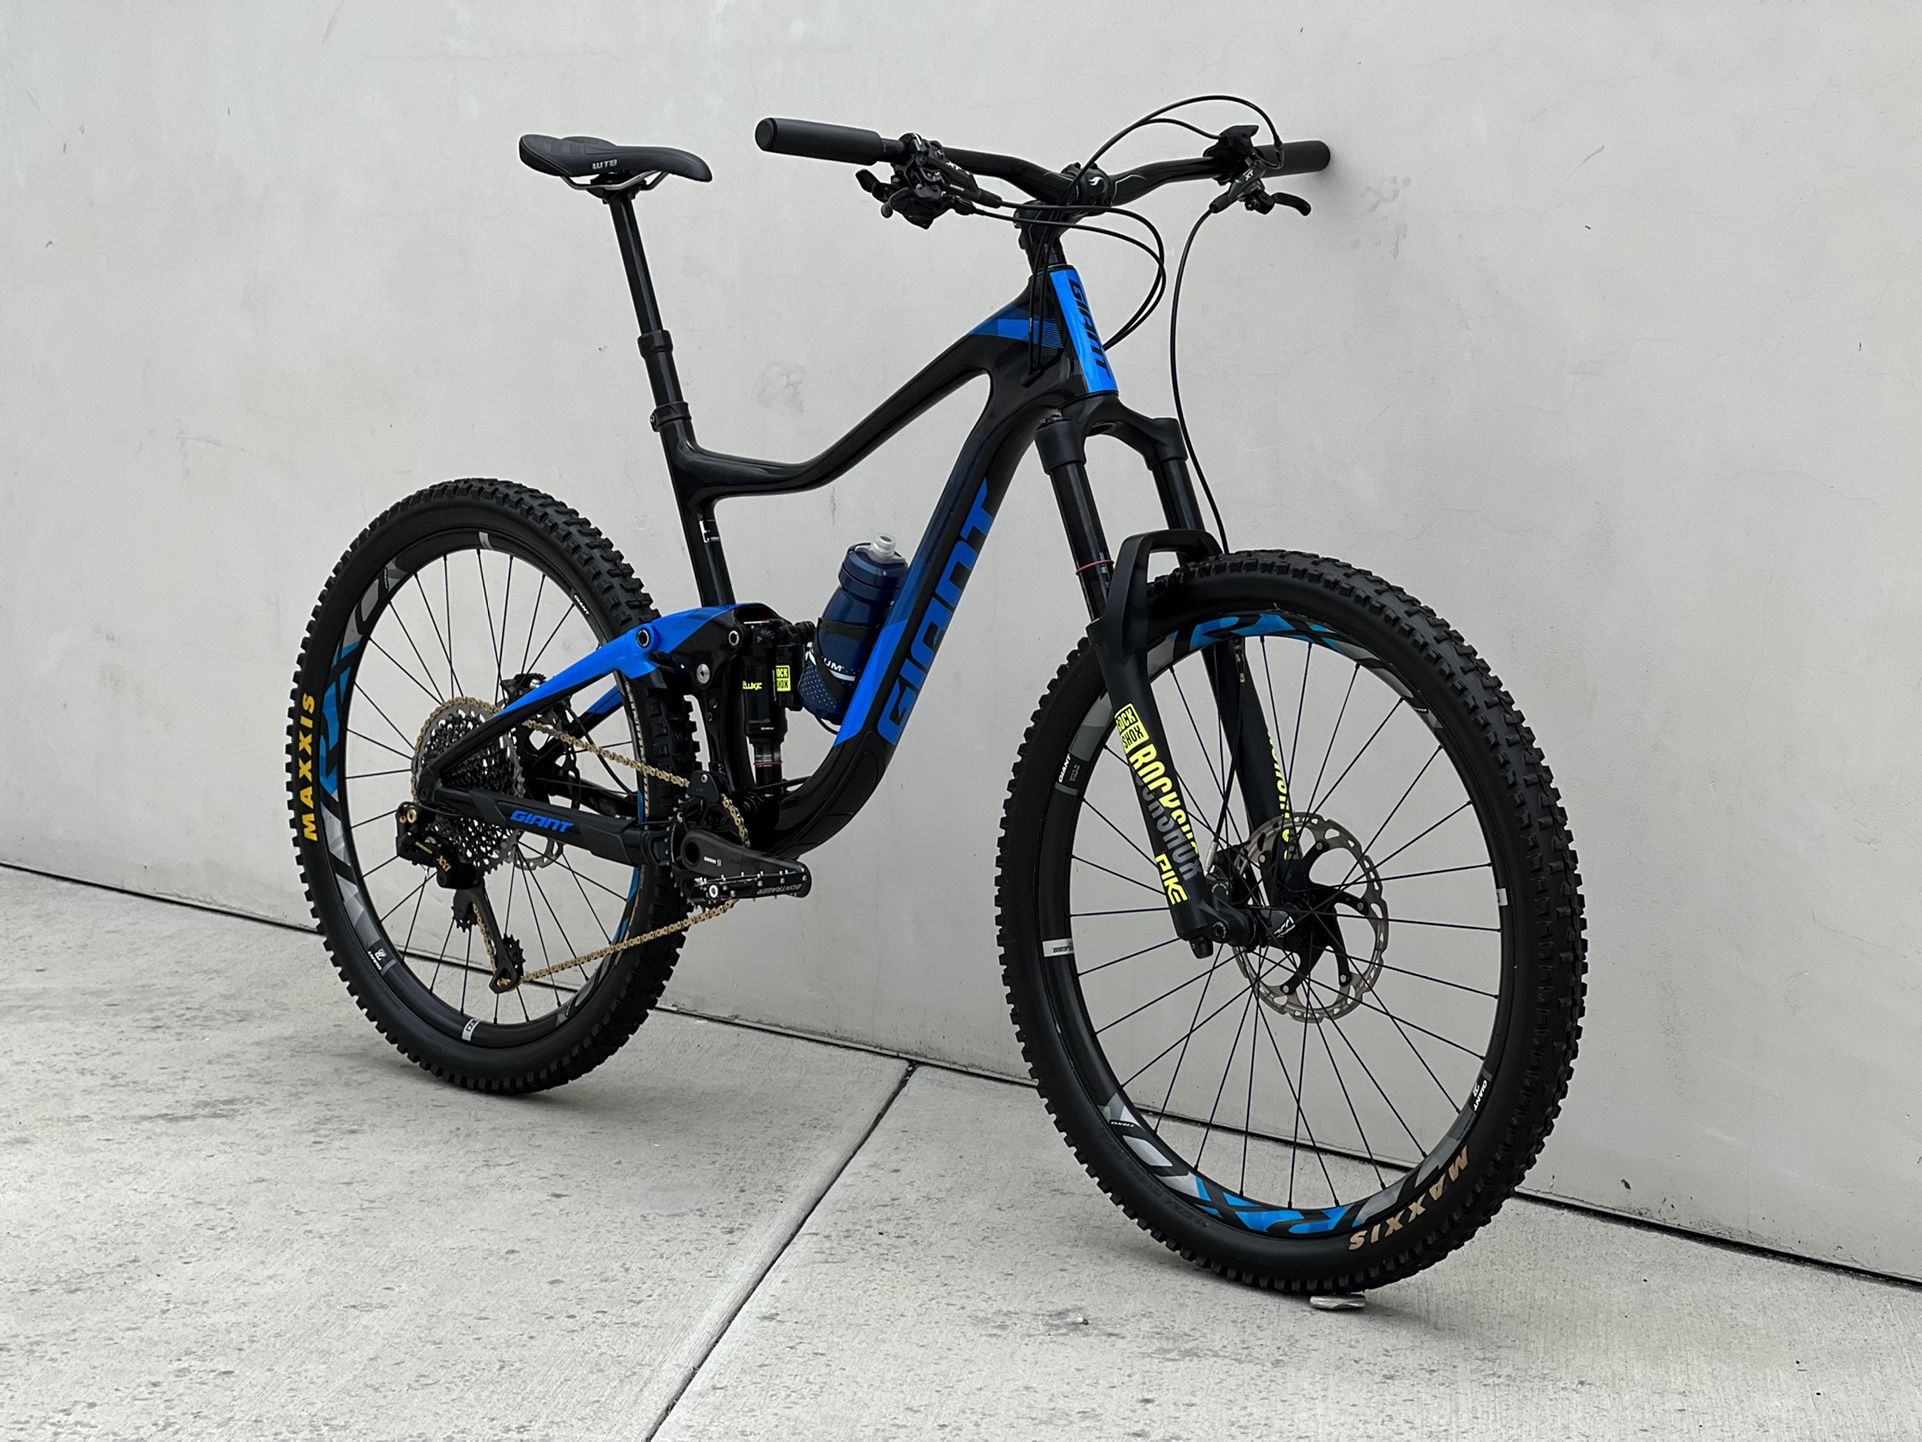 NEW 2019 Giant Trance Advanced 0 Carbon Full Suspension Mountain Bike. L-Size. SRAM XX1 Eagle. Dropper Post. 27.5er